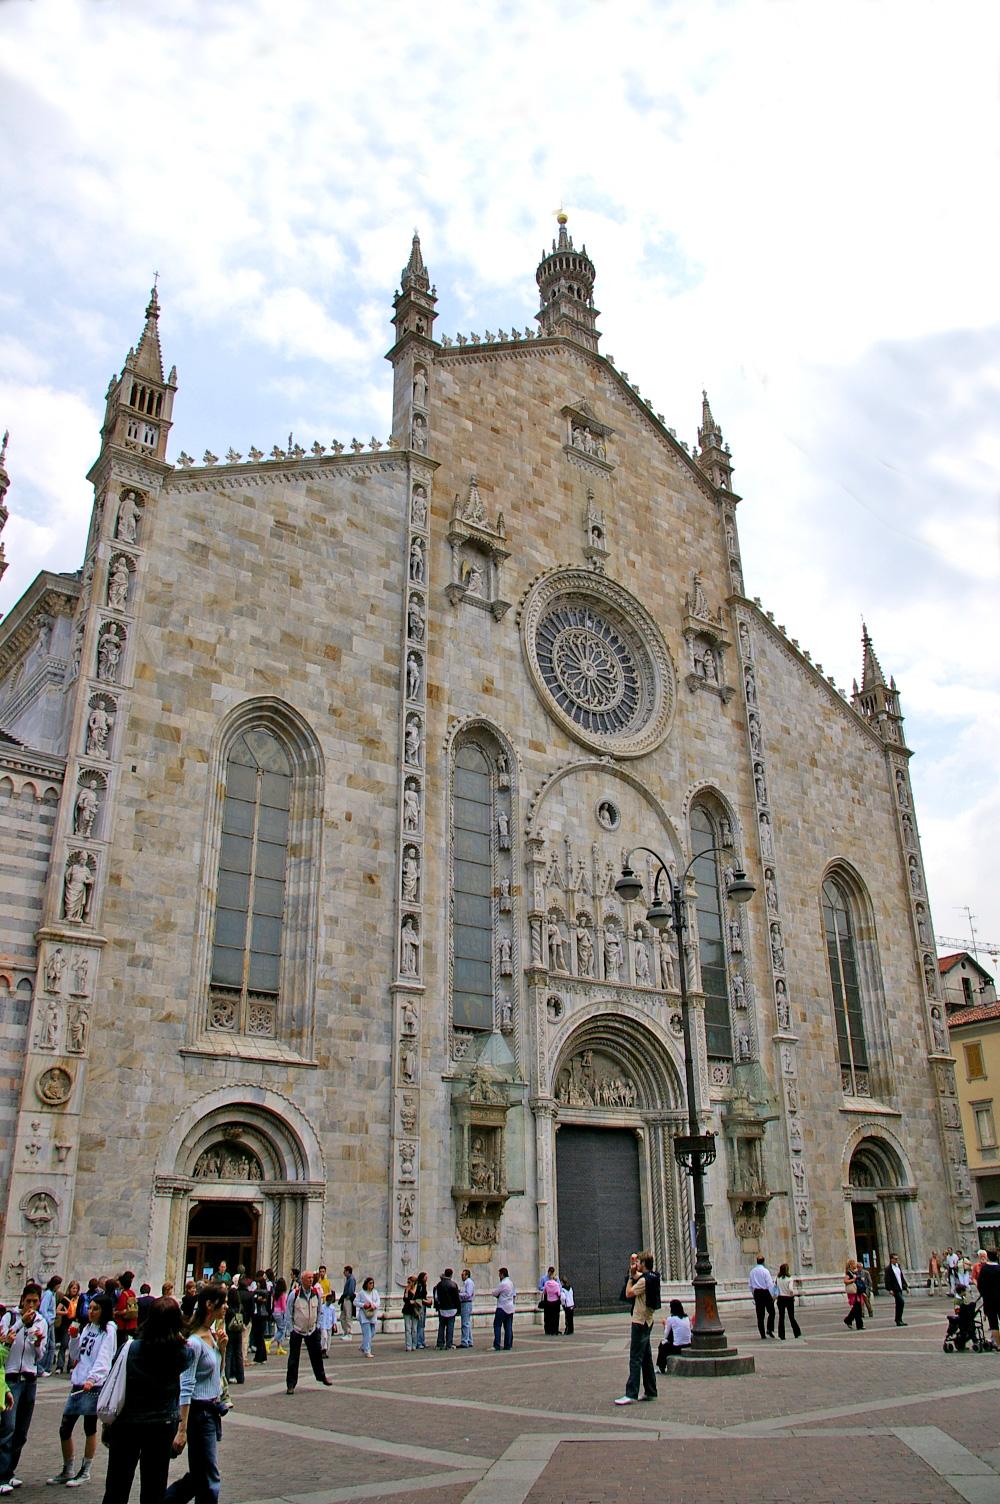 Cover image of this place Duomo di Como